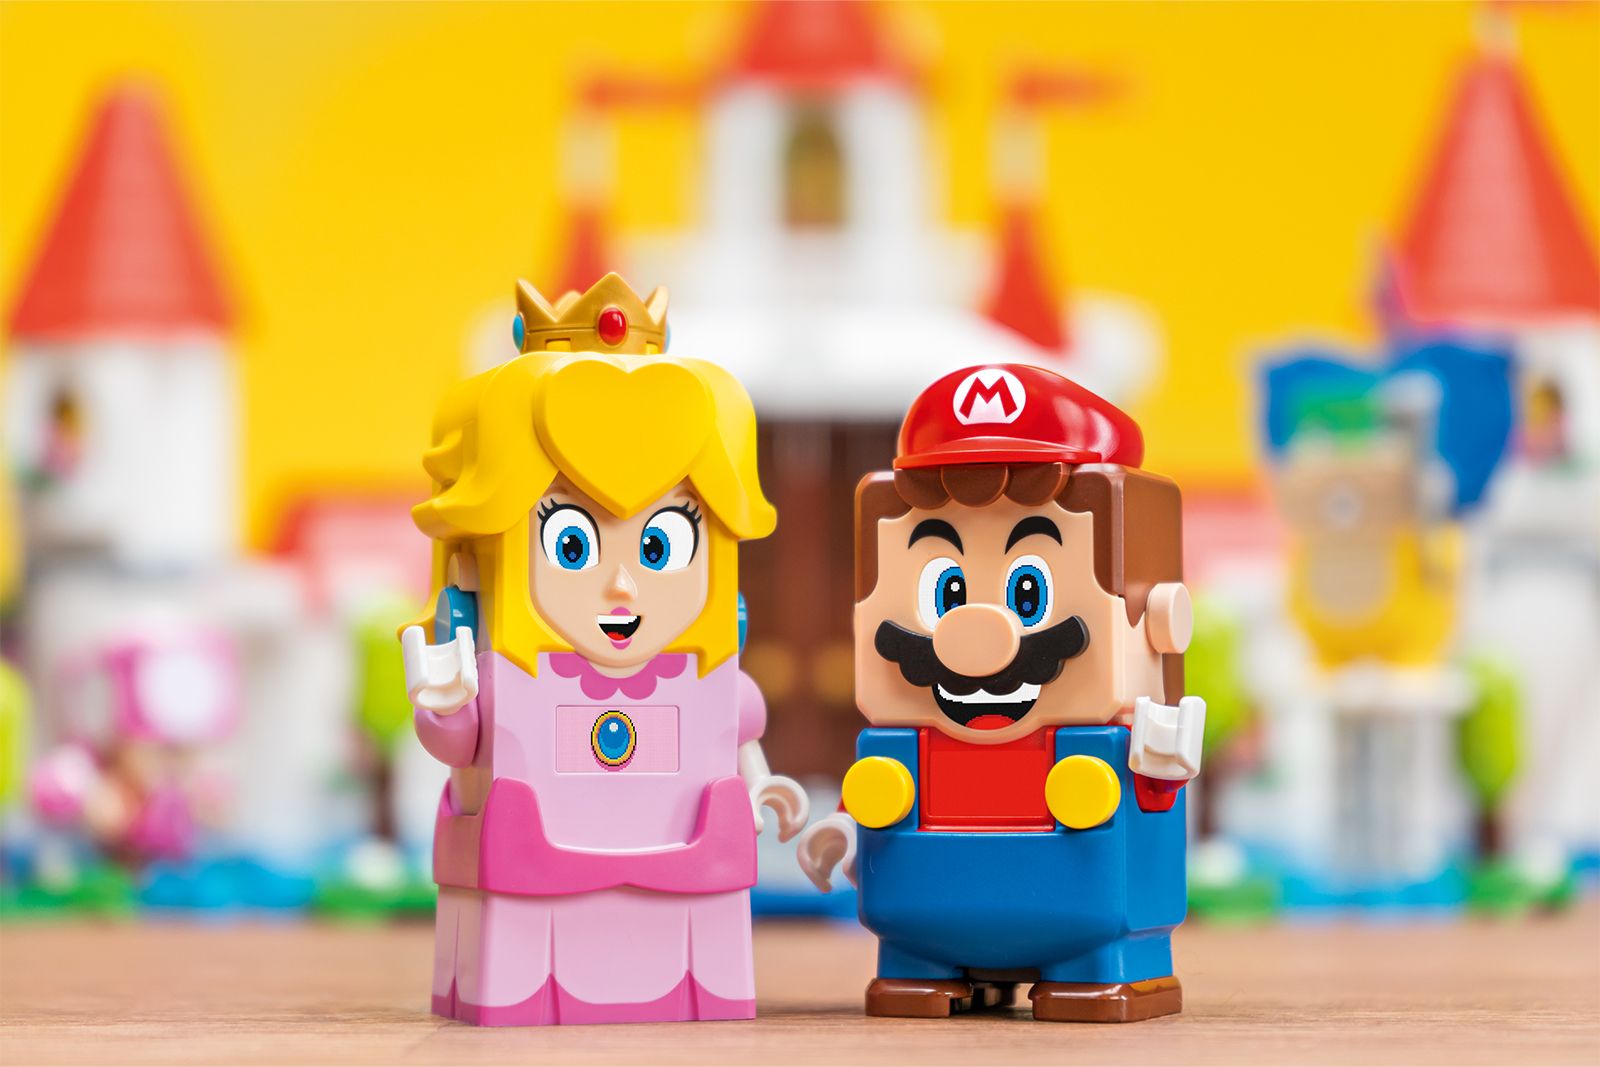 Peach to join Lego Super Mario photo 6